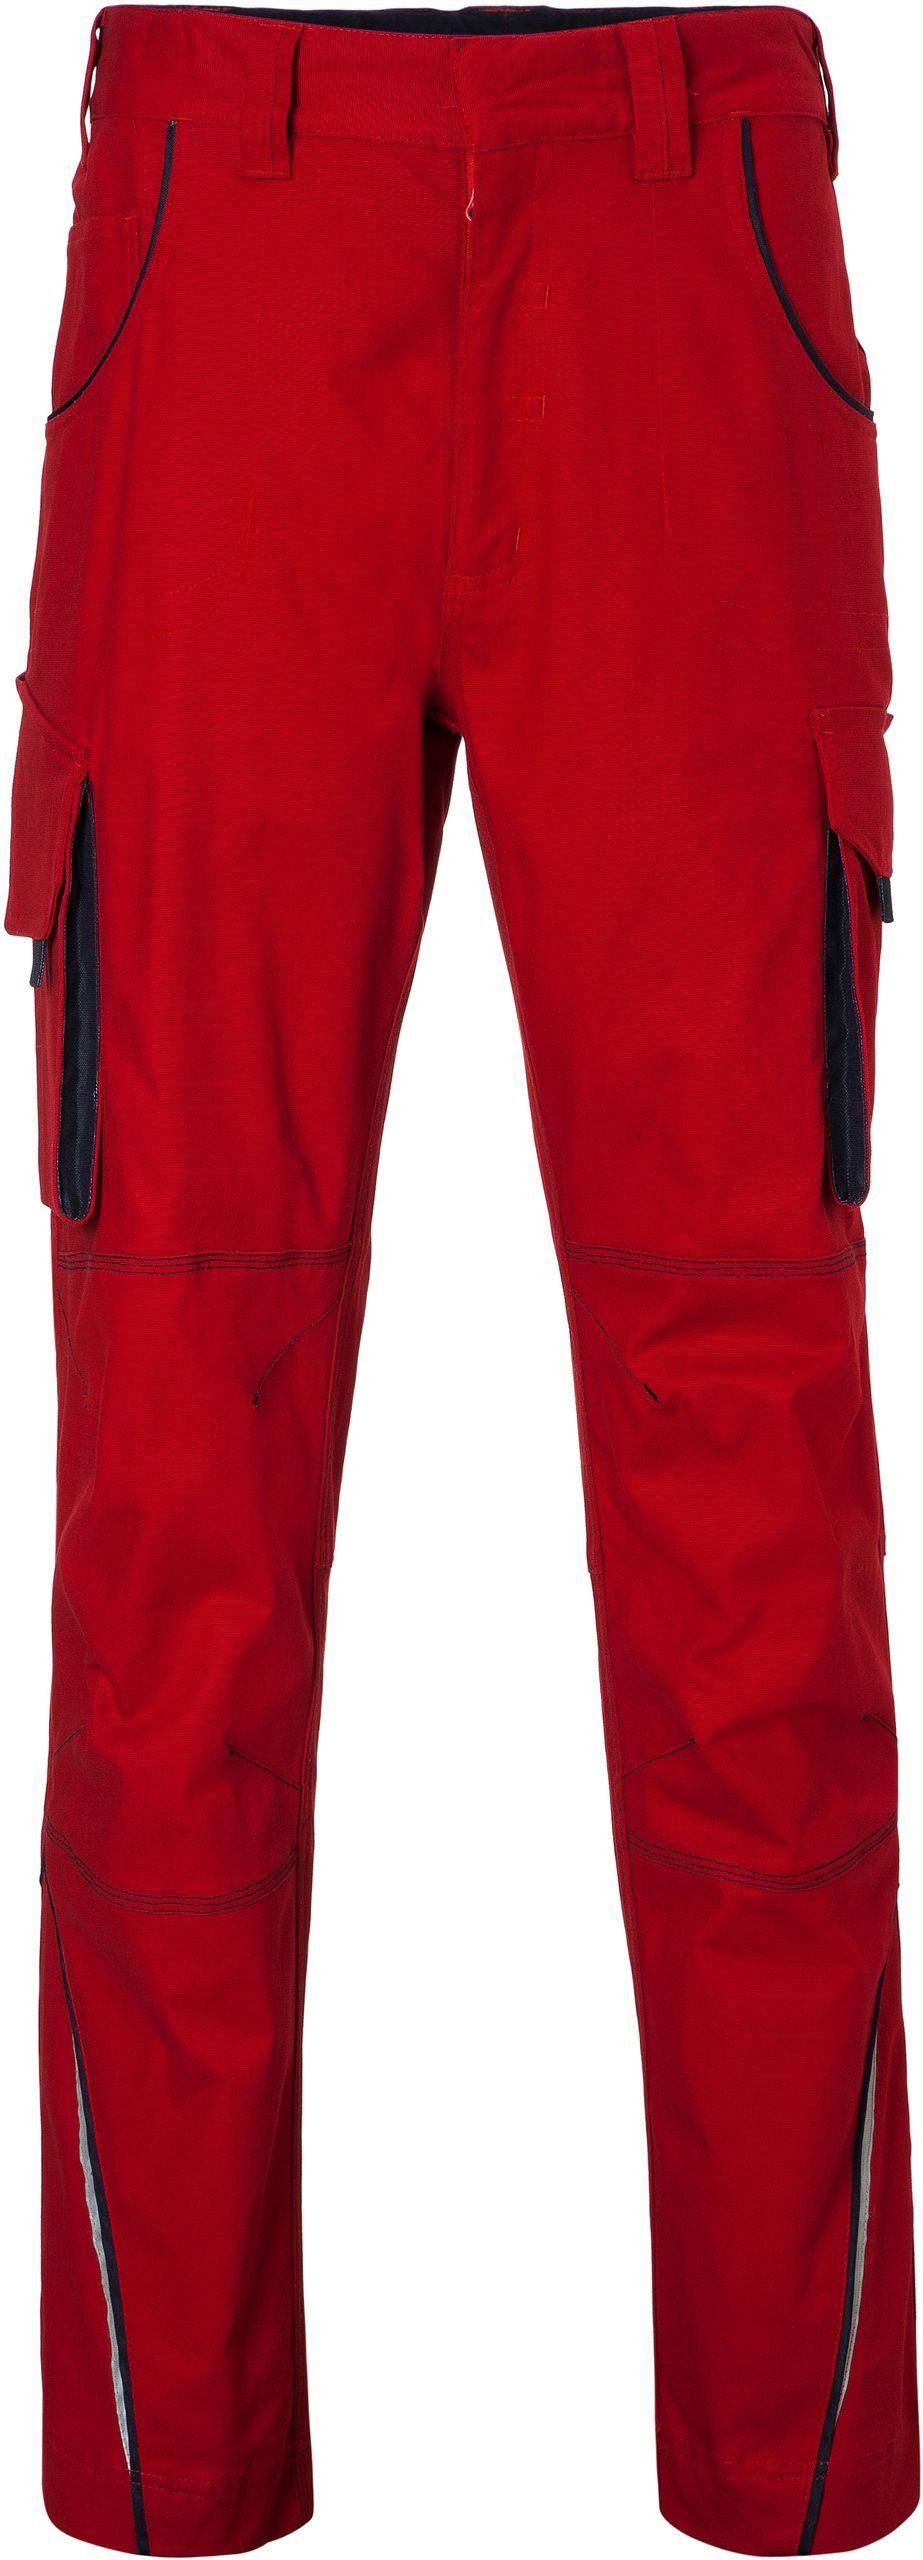 James & Nicholson Arbeitshose Workwear Hose FaS50847 red/navy